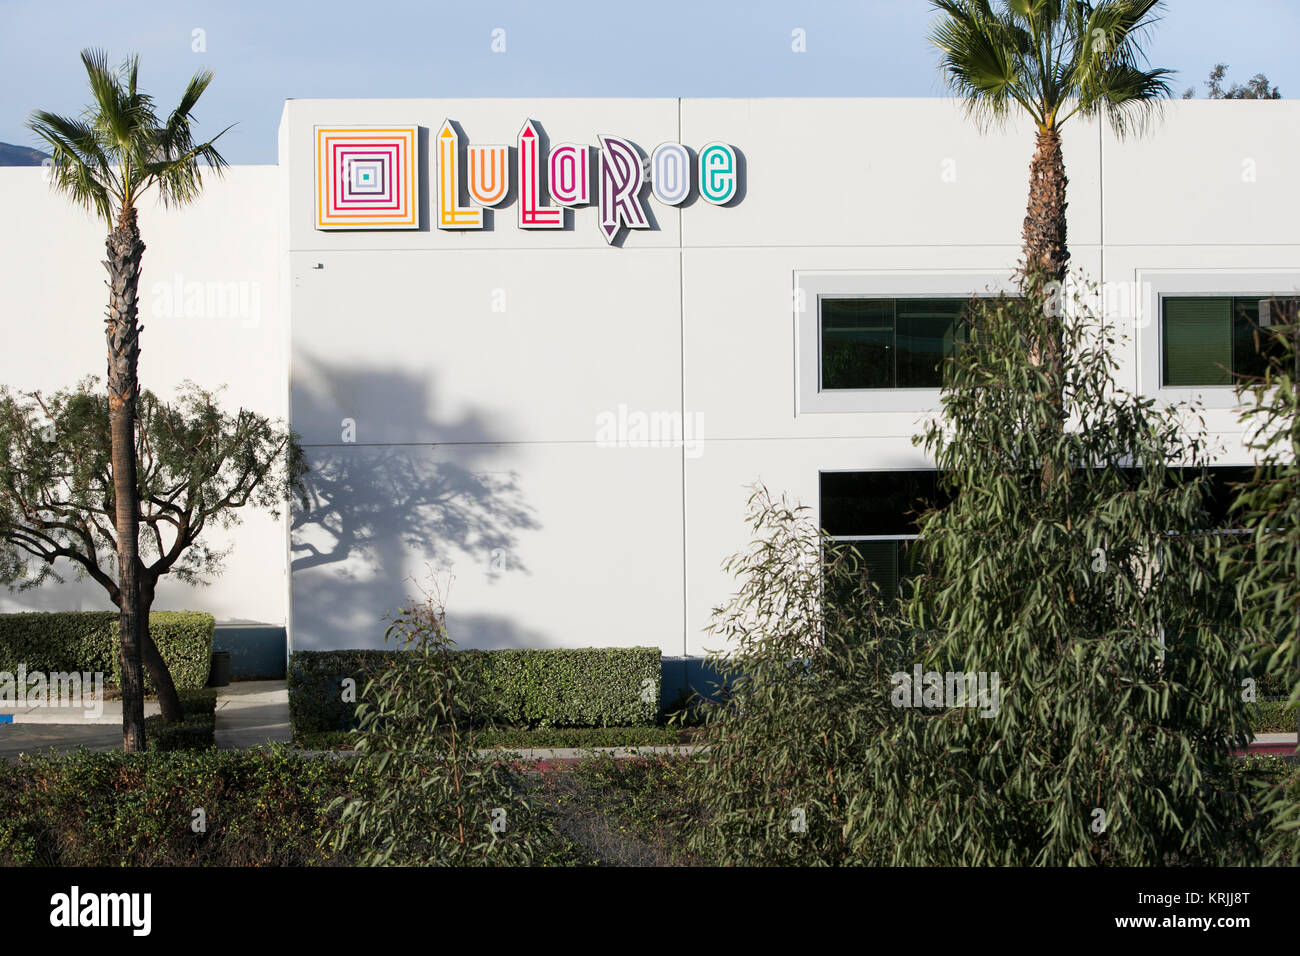 https://c8.alamy.com/comp/KRJJ8T/a-logo-sign-outside-of-the-headquarters-of-lularoe-in-corona-california-KRJJ8T.jpg